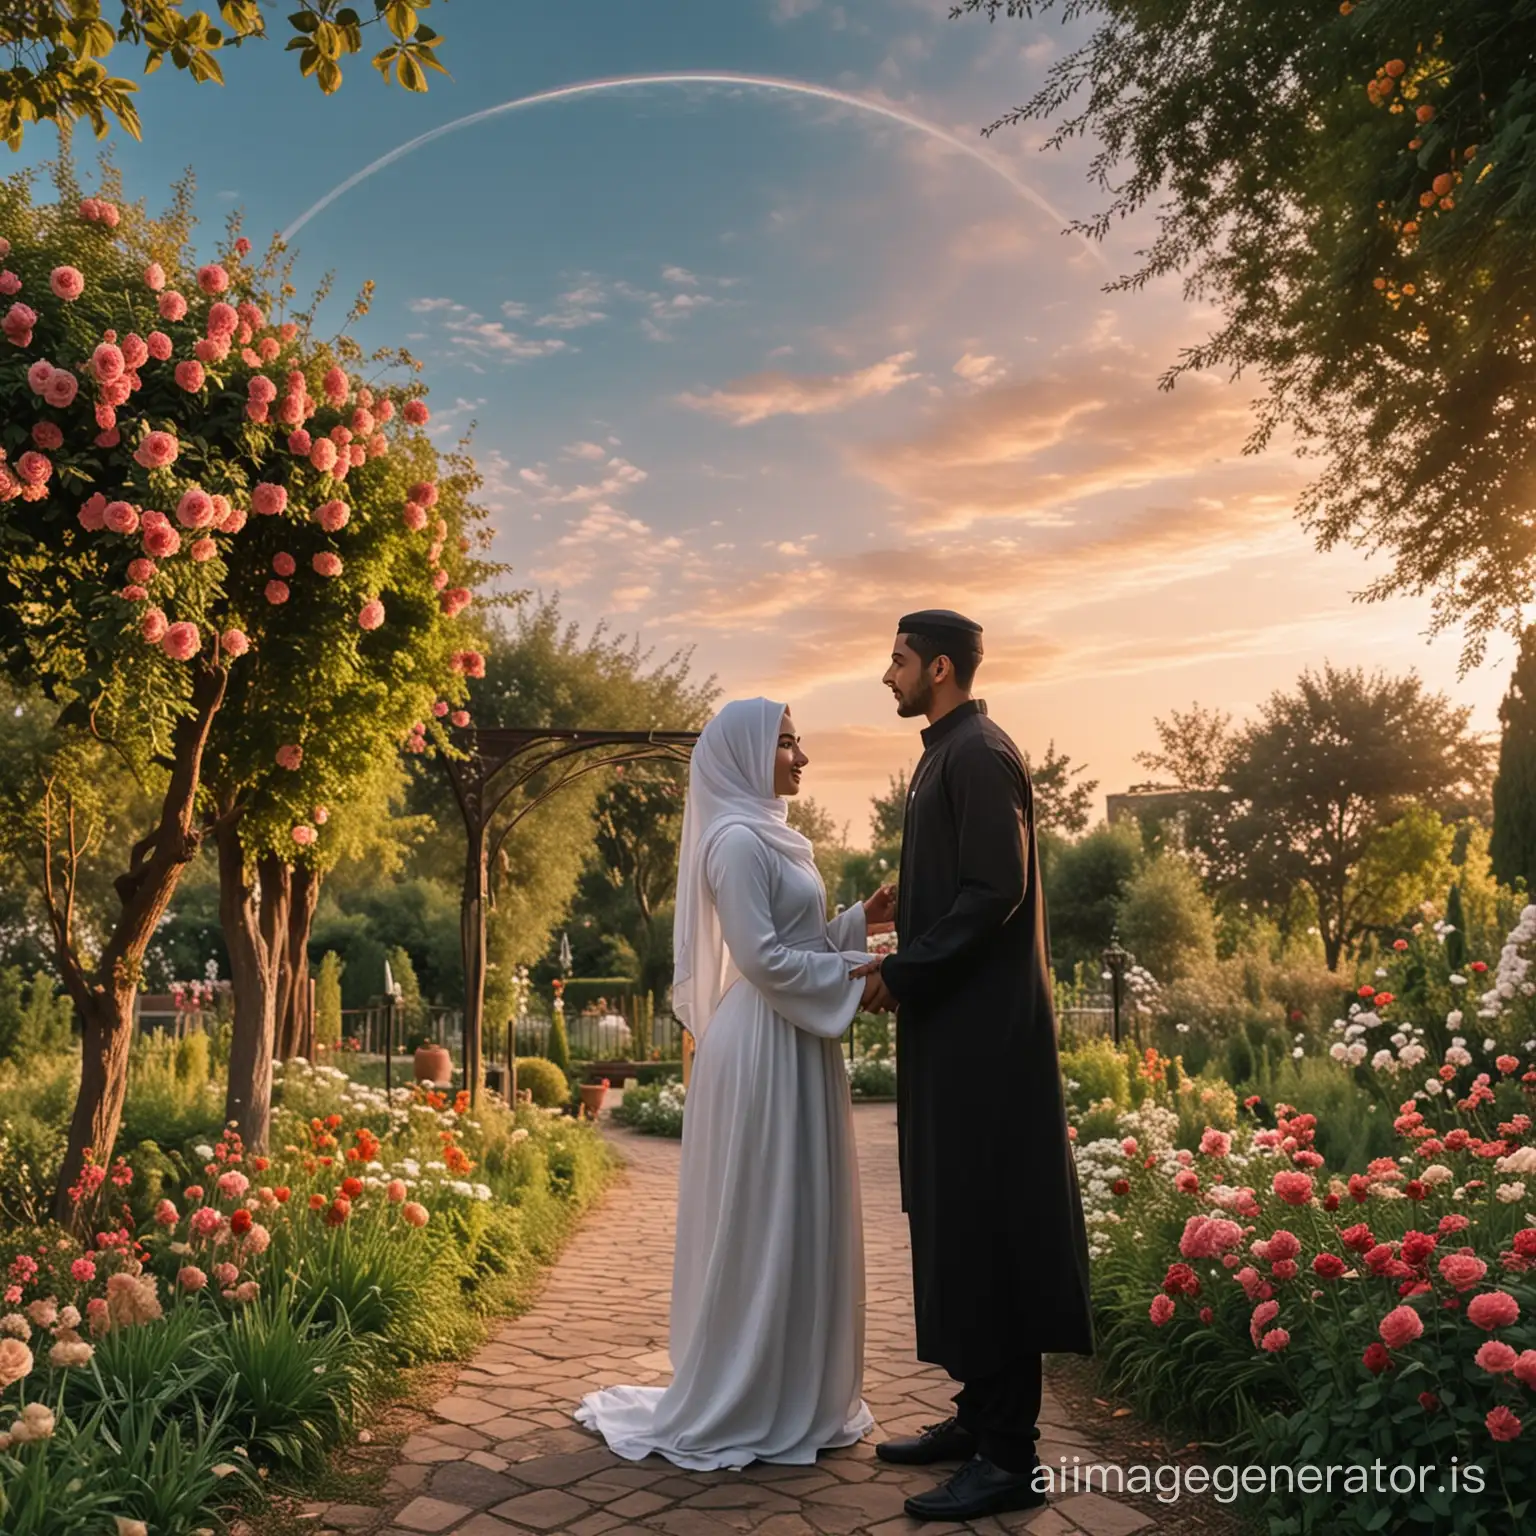 Muslim-Couple-in-Hijab-Embracing-under-Garden-Arc